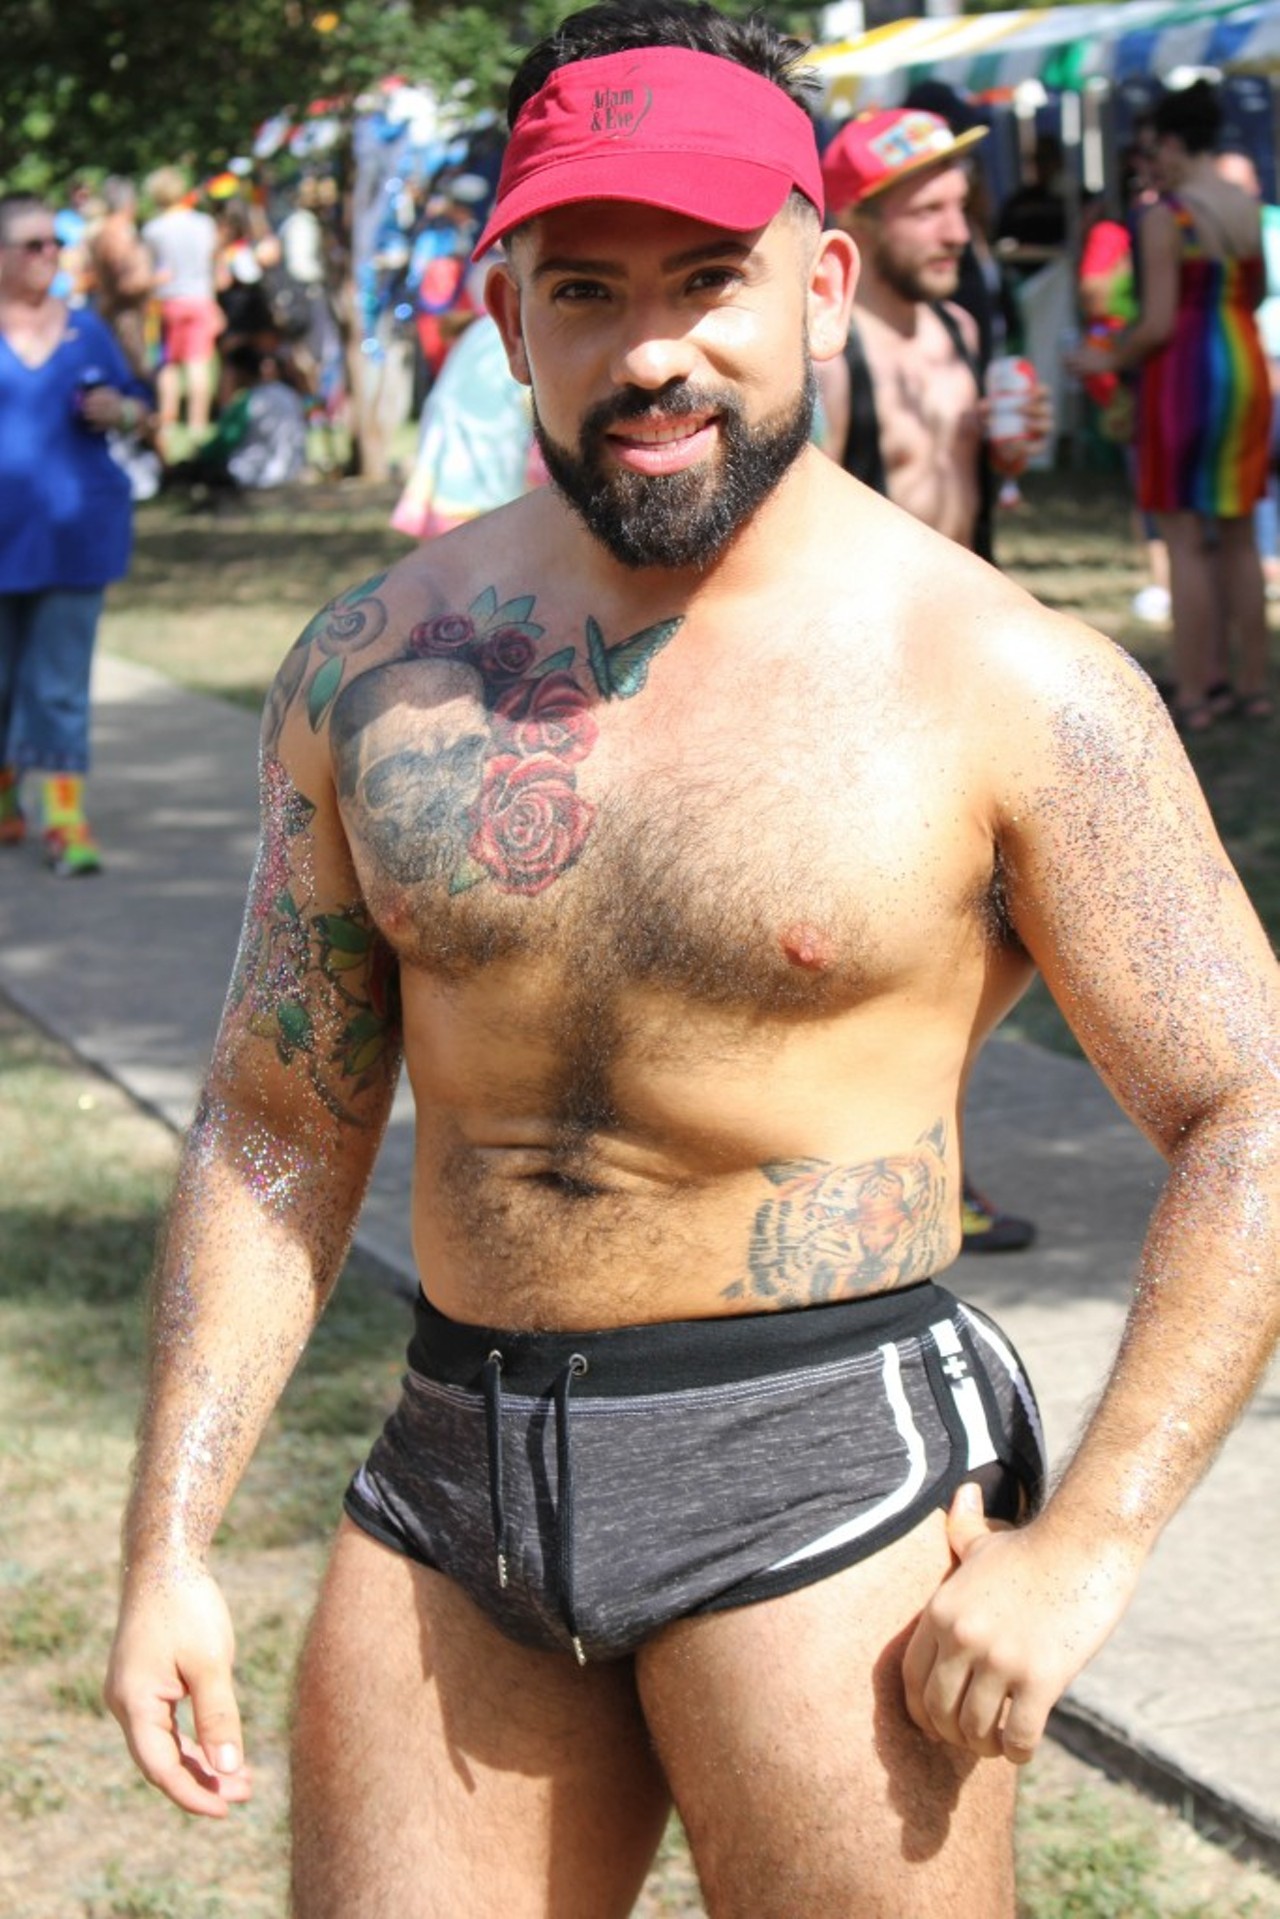 62 Colorful Moments from San Antonio's Pride Festival